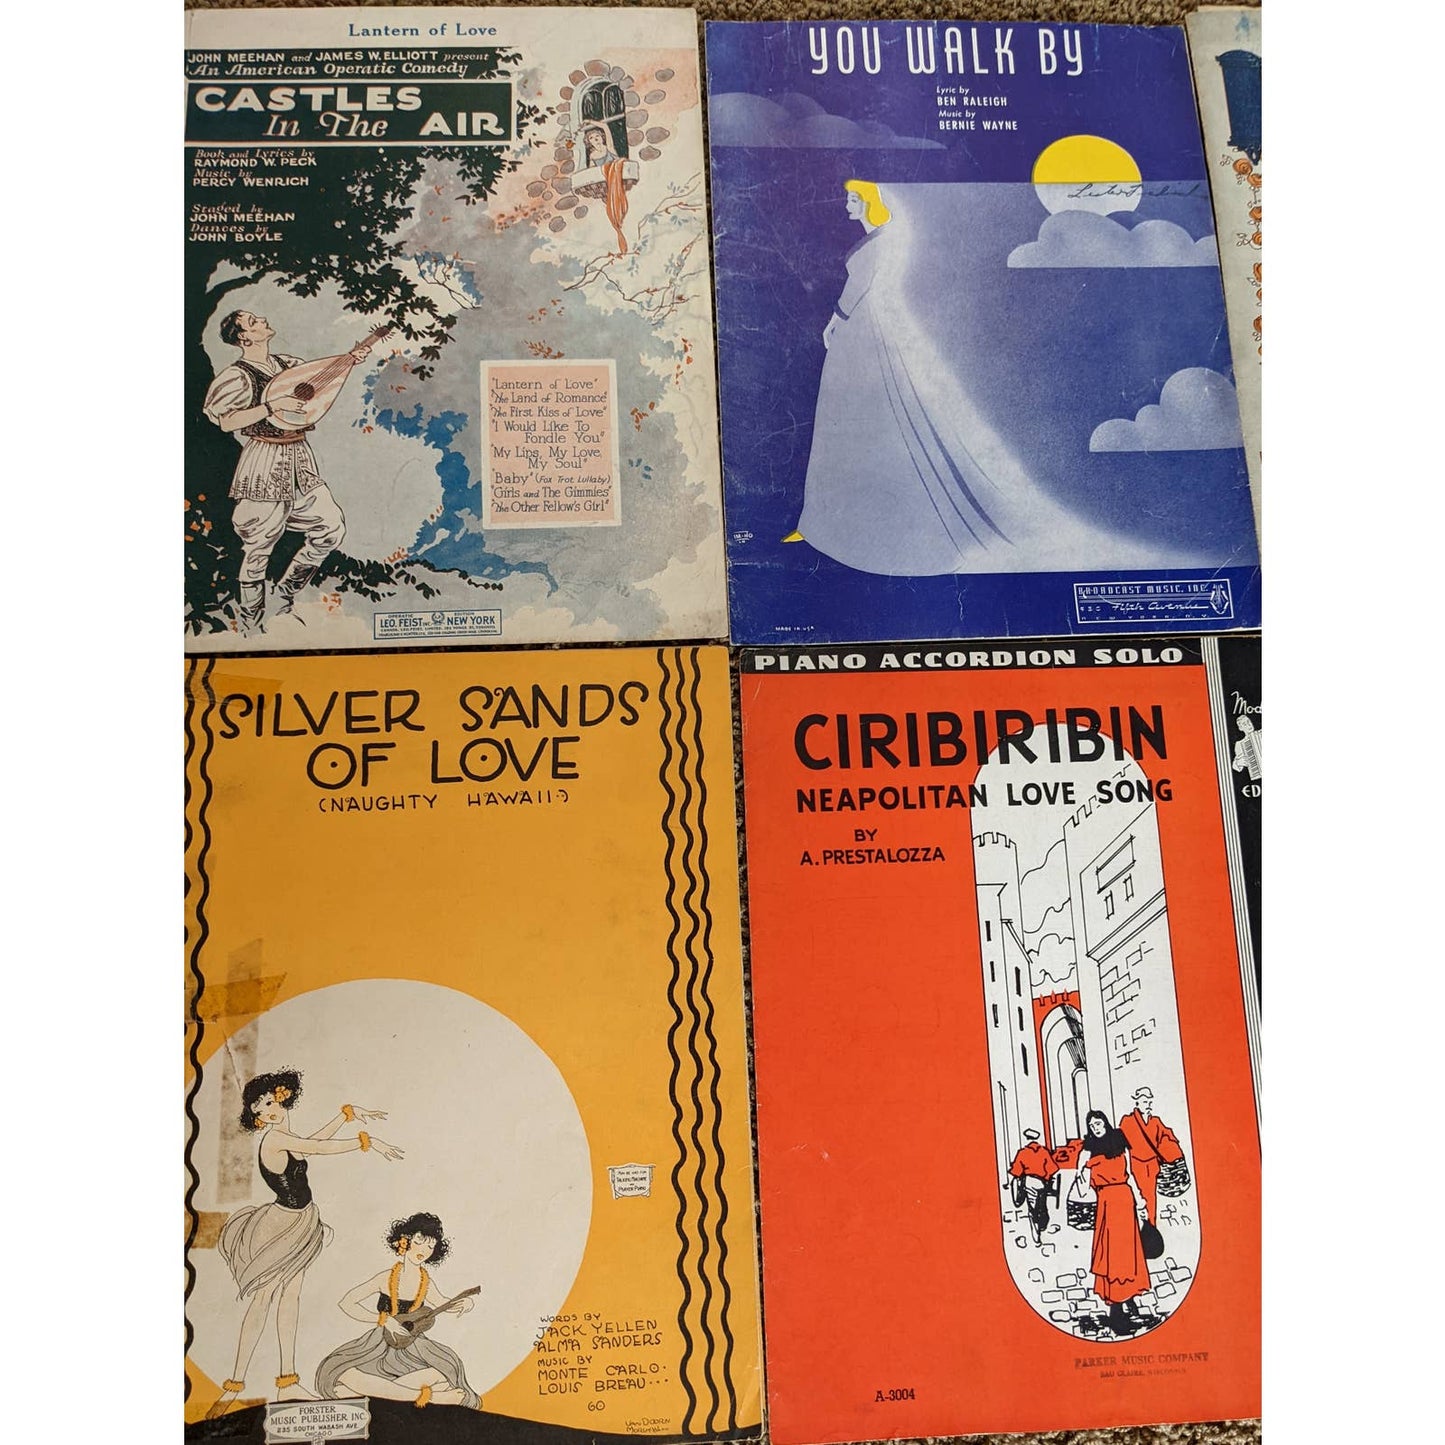 Vintage Sheet Music Lot of 7 1930s-1940s Lantern of Love, Honolulu Eyes